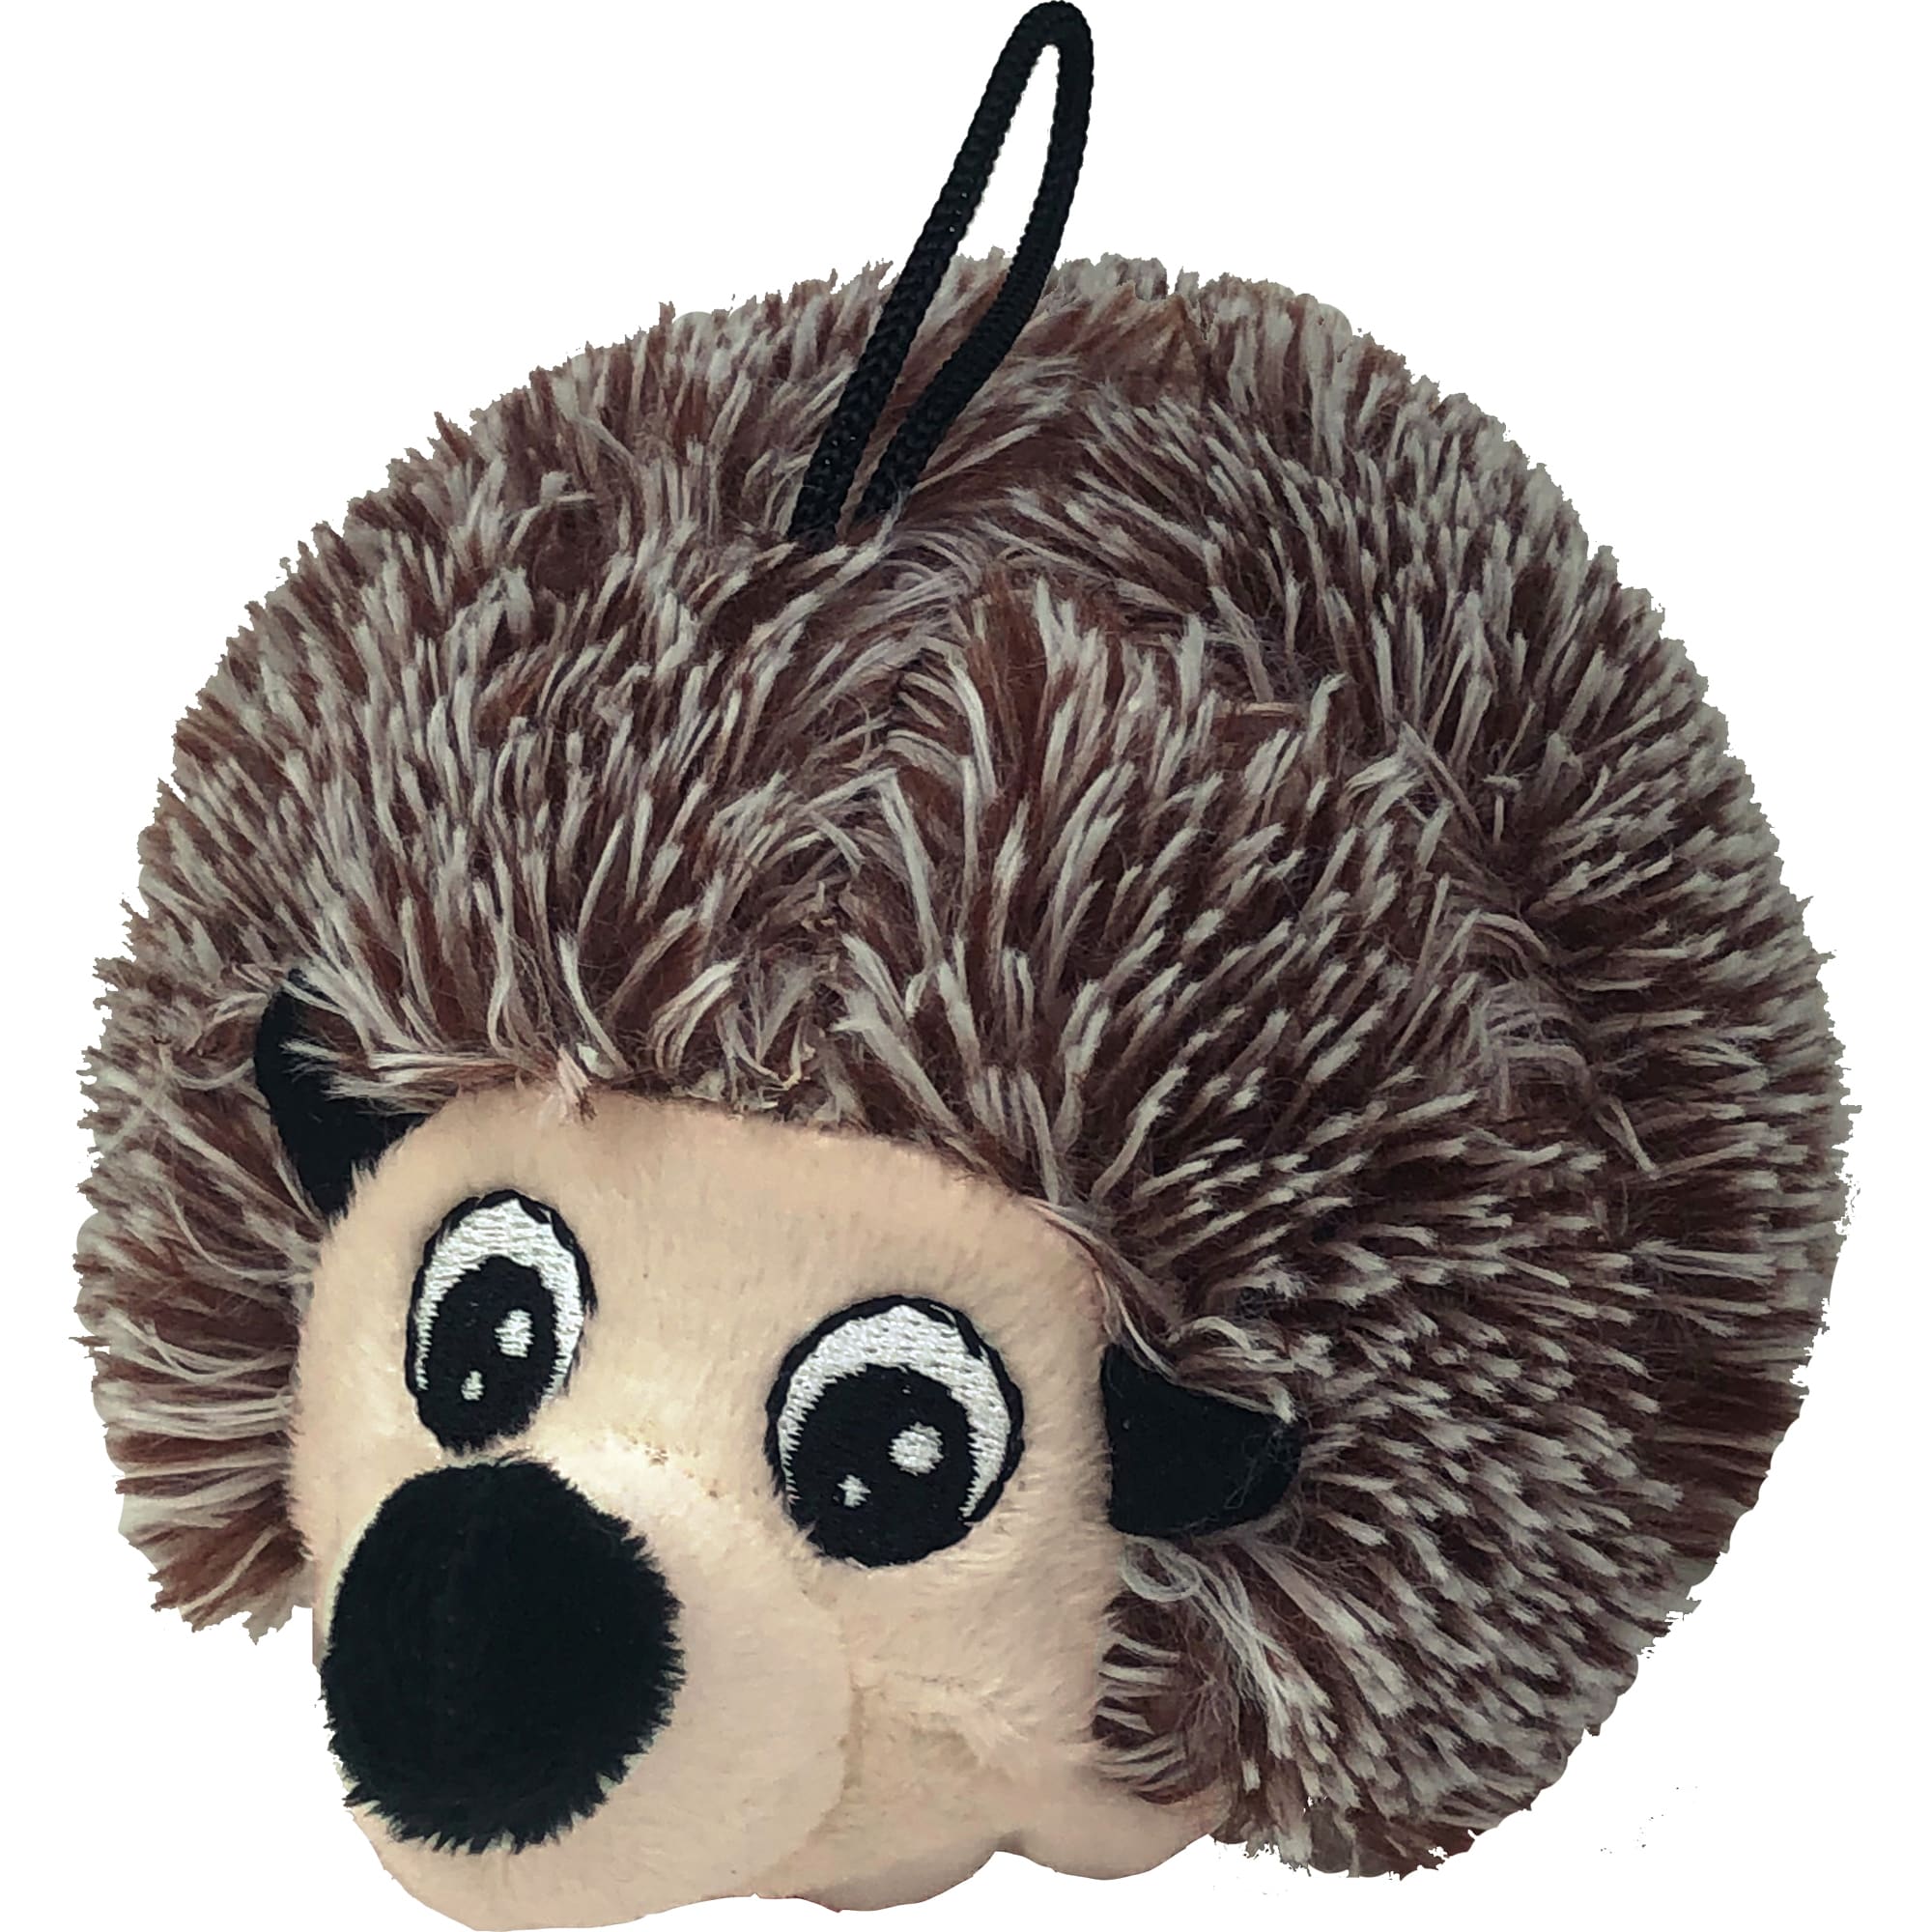 squeaky hedgehog dog toy